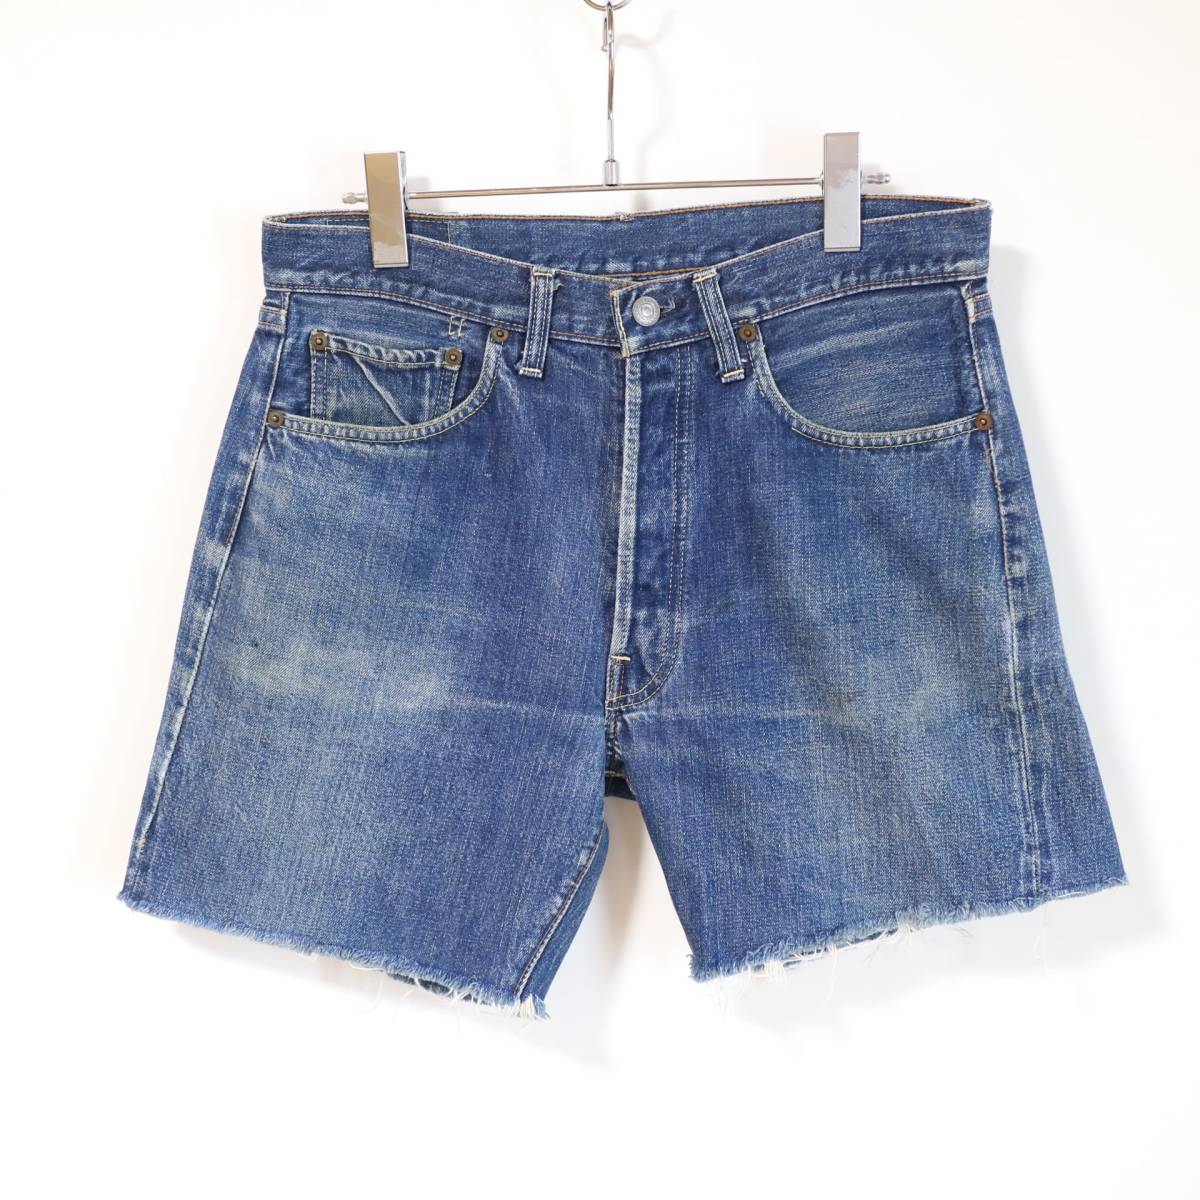 Levi's 501 / 60's Cut Off Denim Shorts / Made in USA /リーバイス/501/ビッグE/Sタイプ/ヴィンテージデニム/カットオフ/アメリカ製